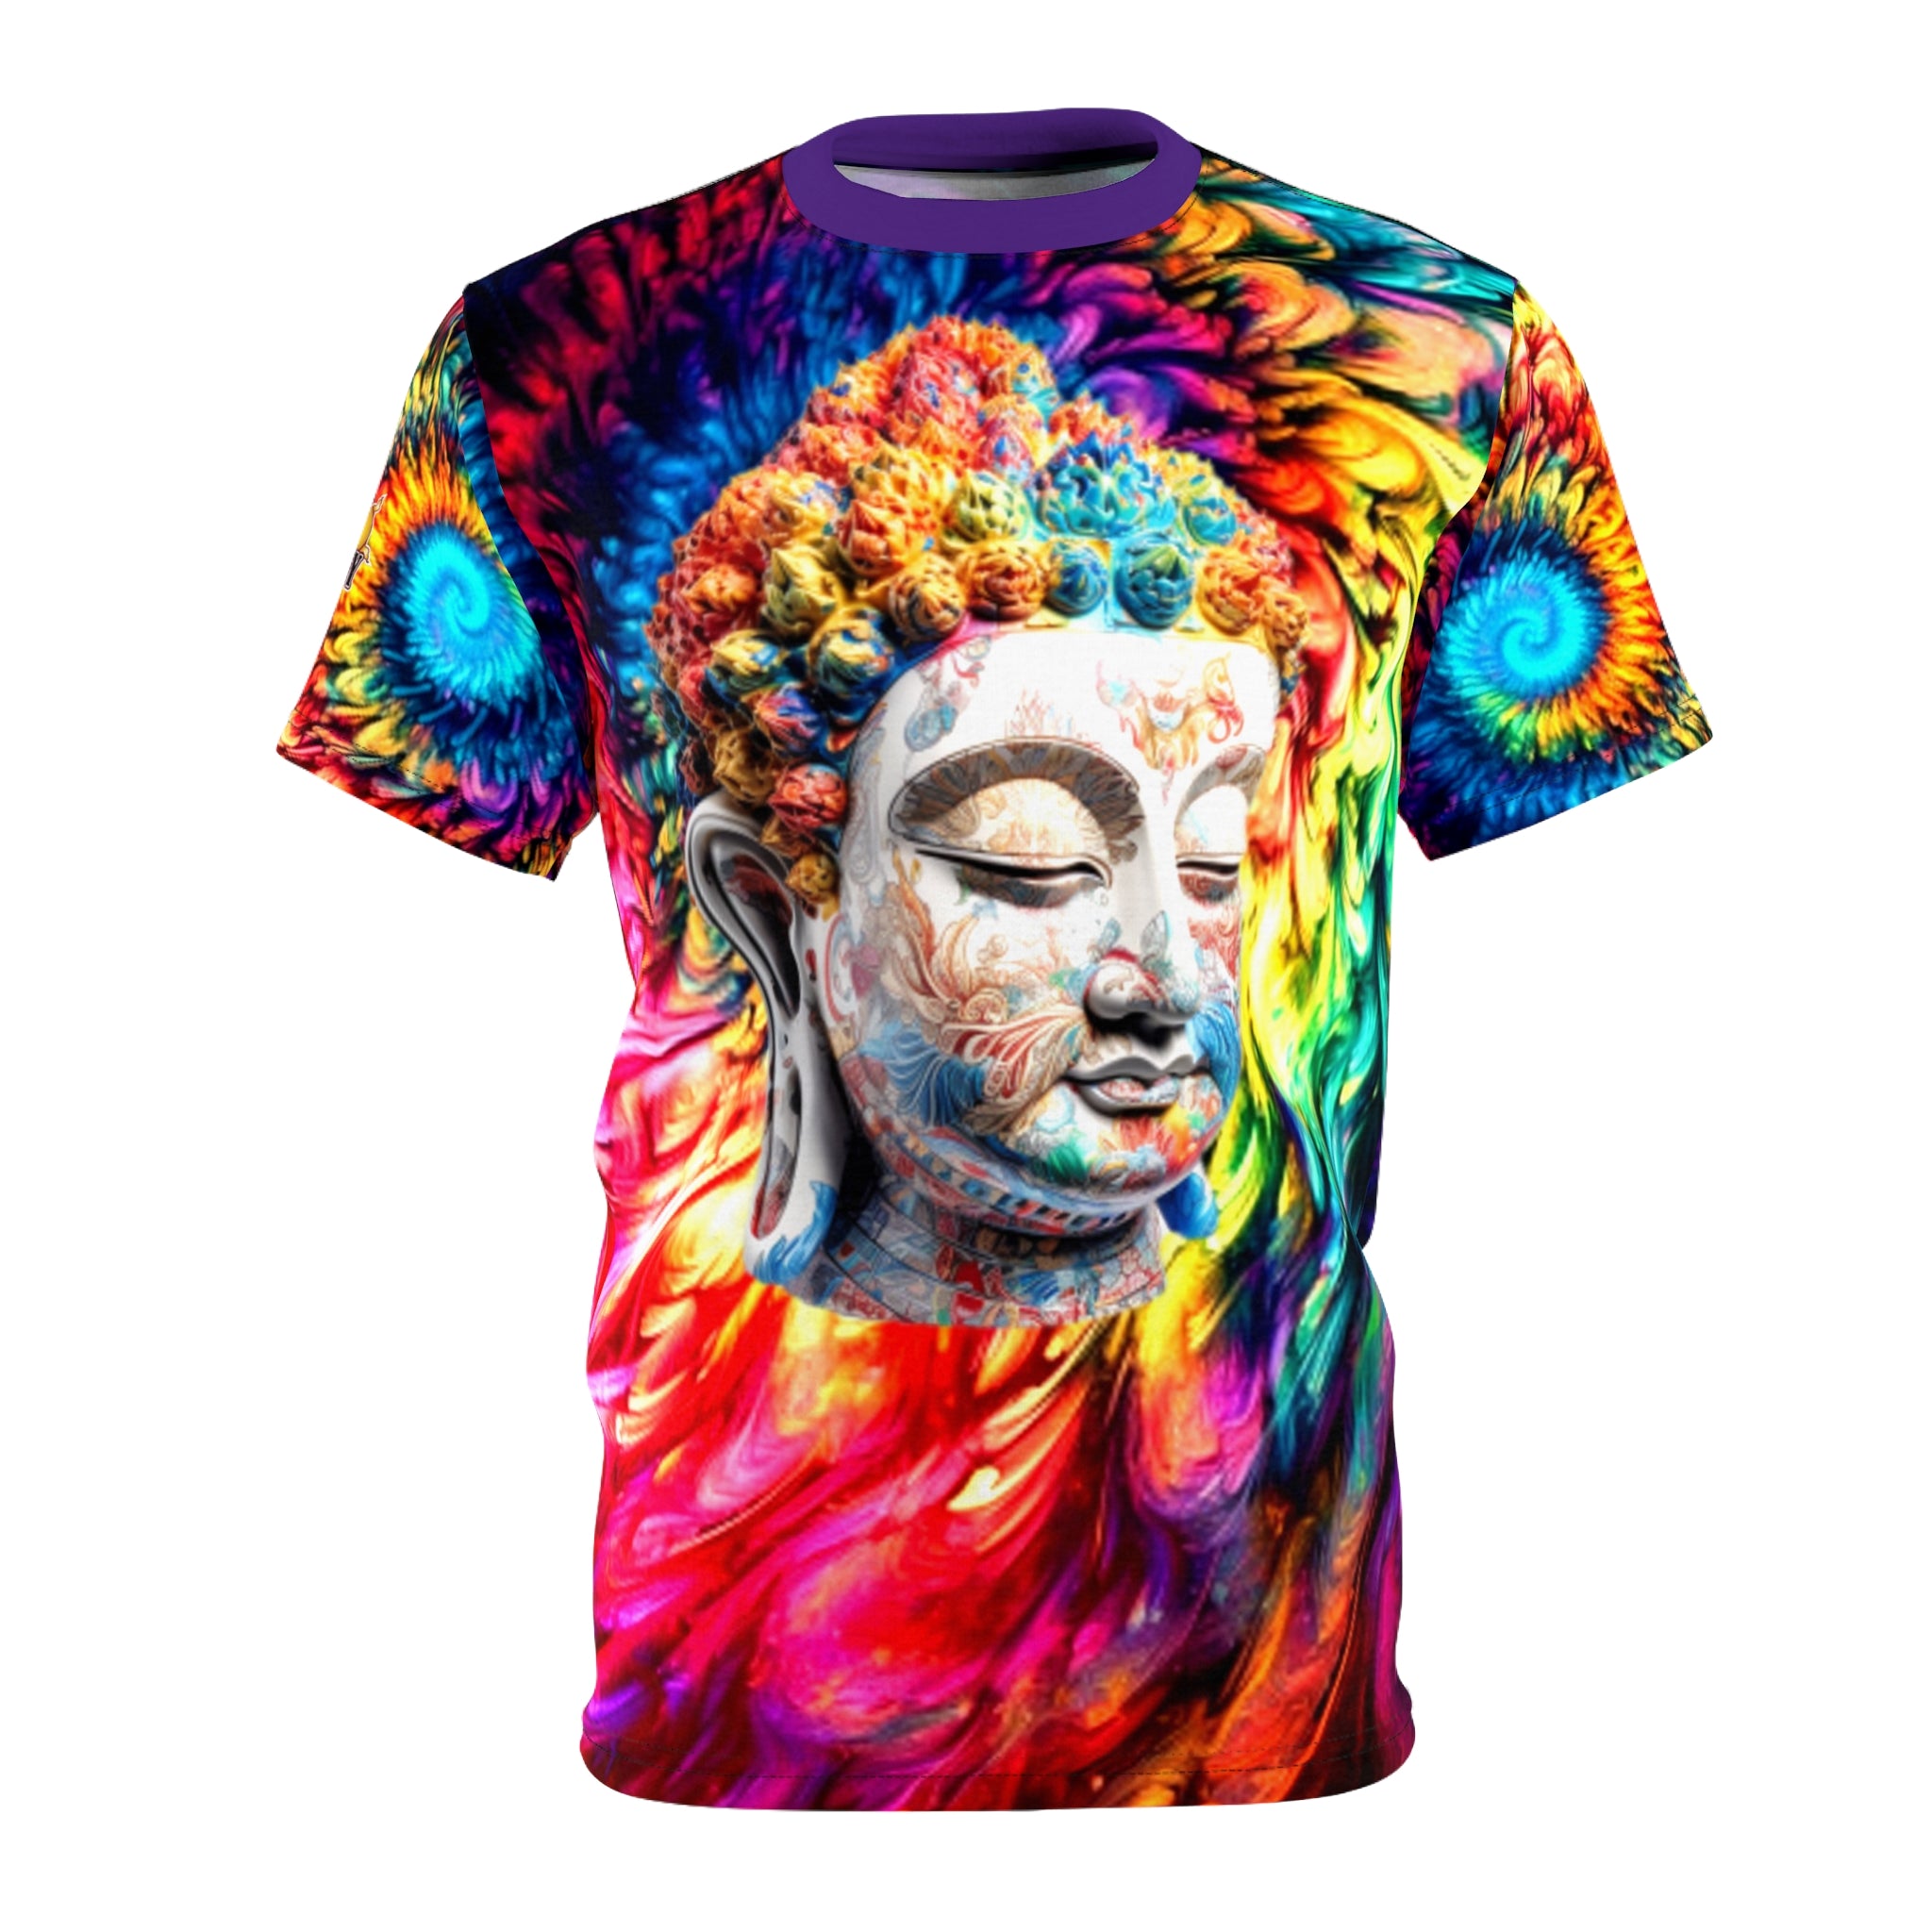 Unisex Buddha head T shirt